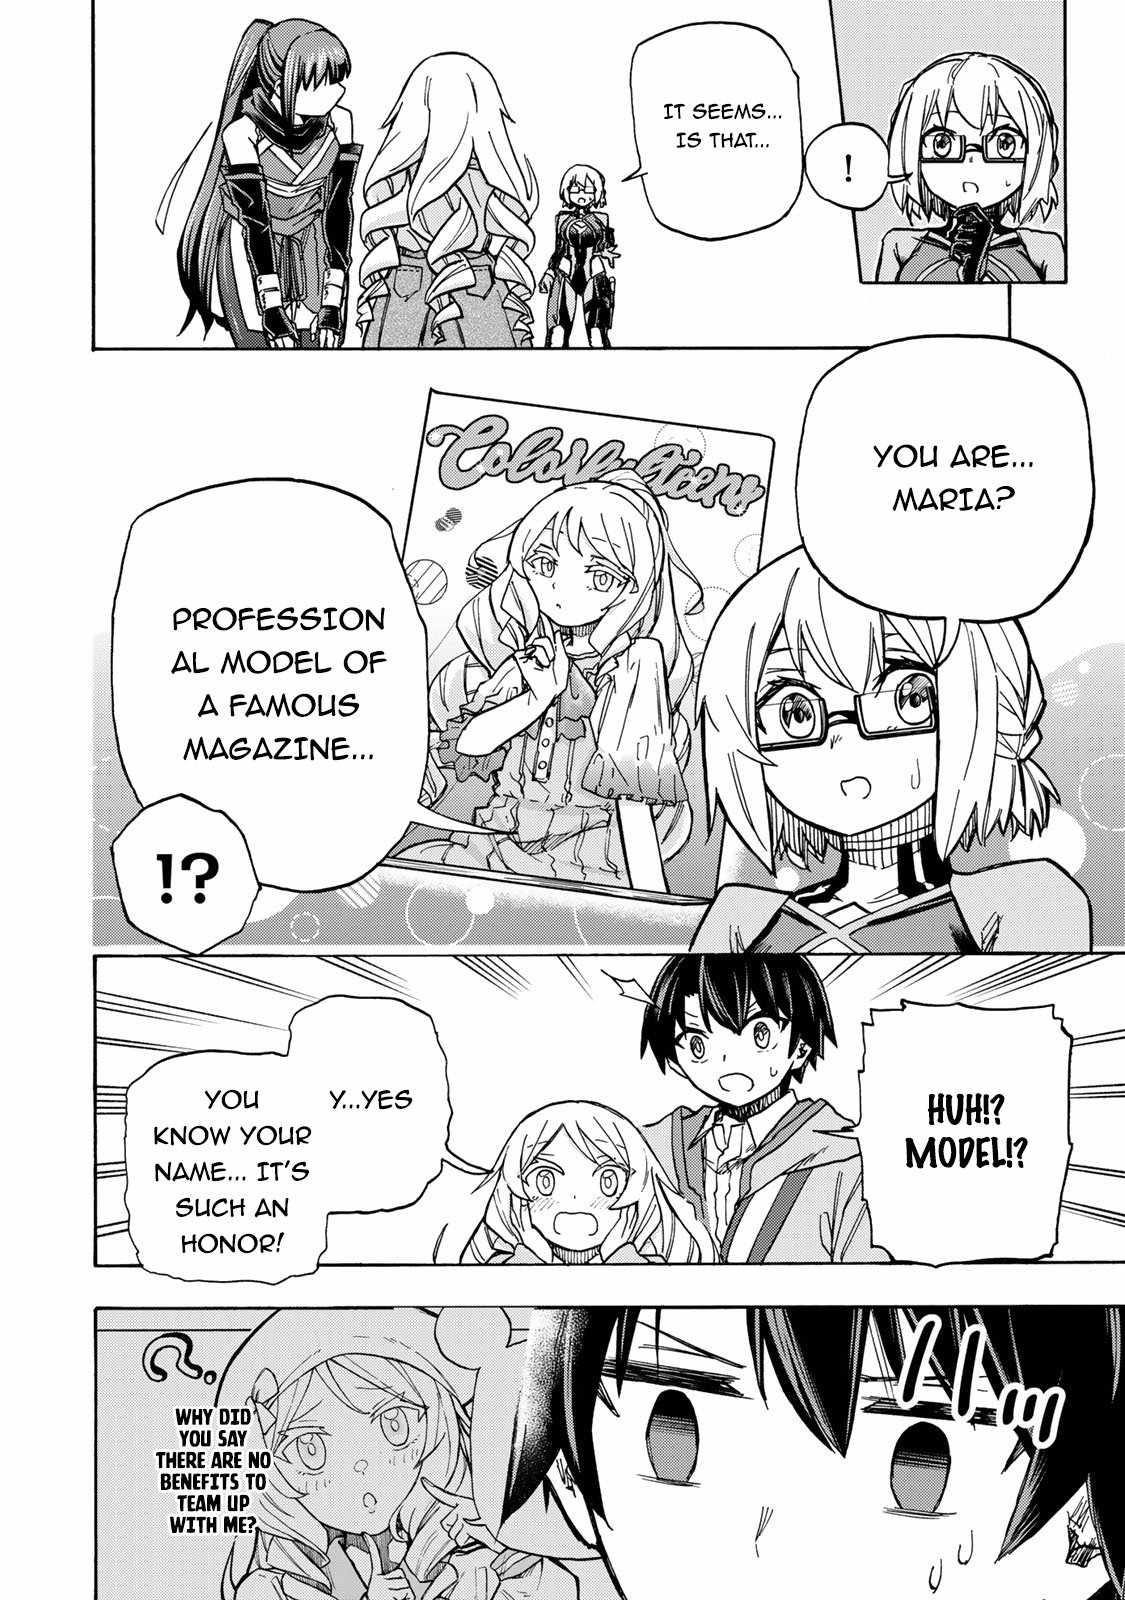 Read Manga Saikyou de Saisoku no Mugen Level Up - Chapter 5